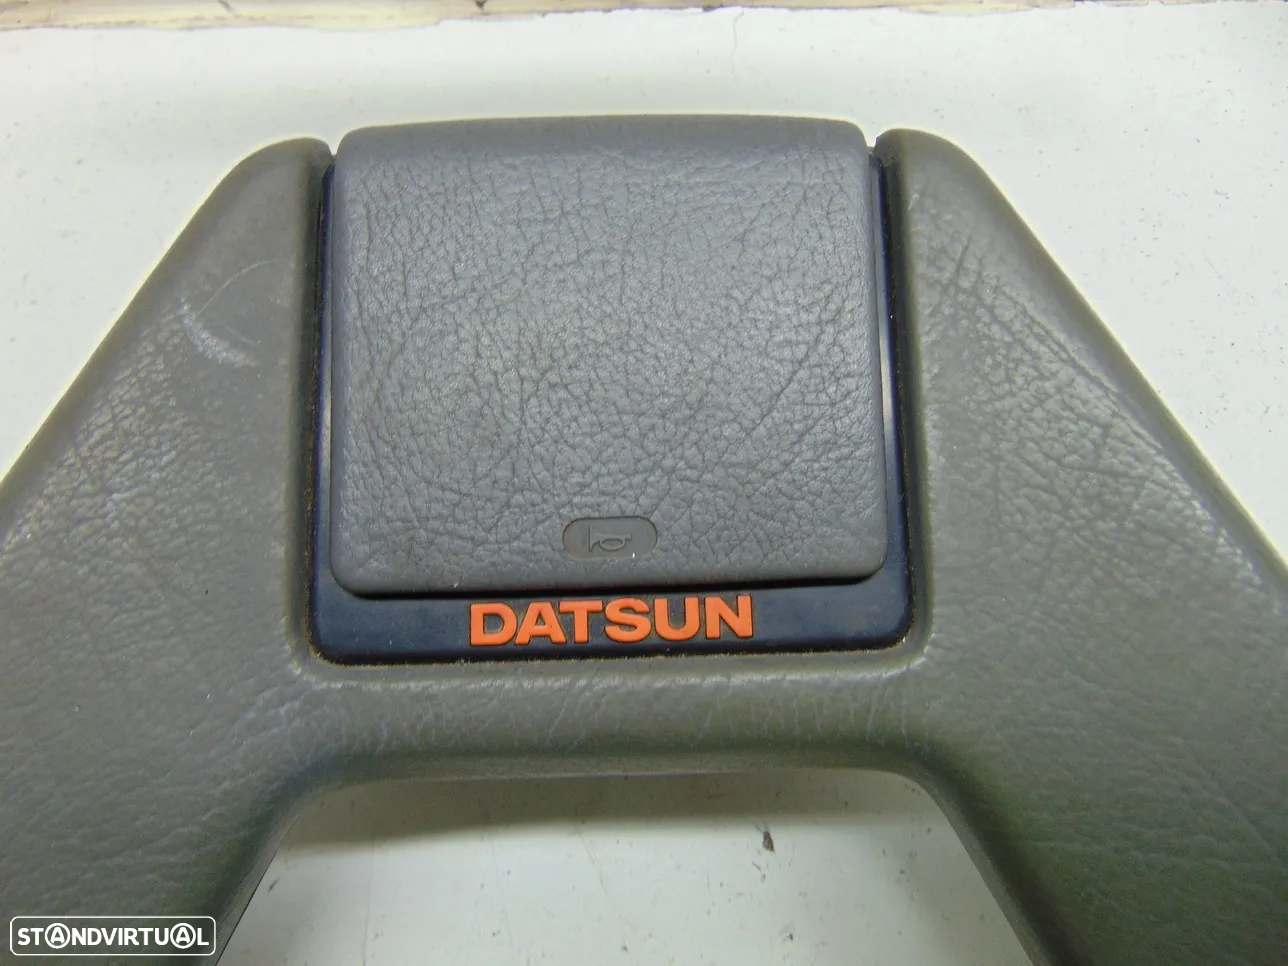 Datsun Stanza coupê volante - 2